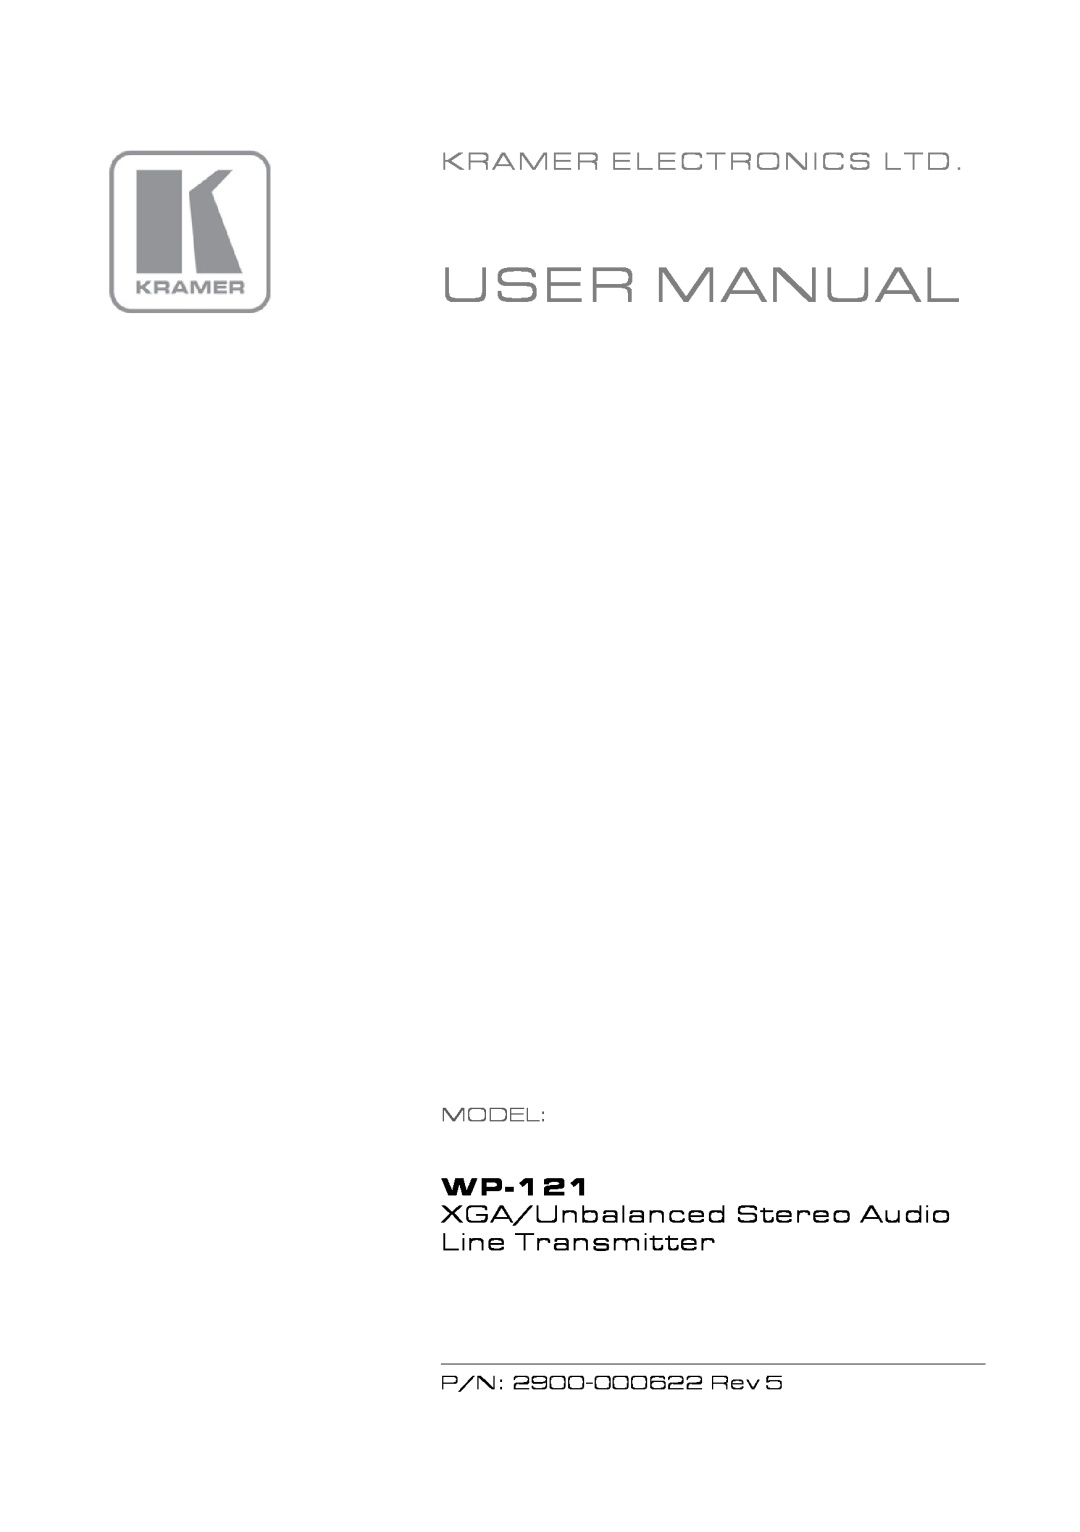 Kramer Electronics WP-121 user manual User Manual, Kramer Electronics Ltd, XGA/Unbalanced Stereo Audio Line Transmitter 